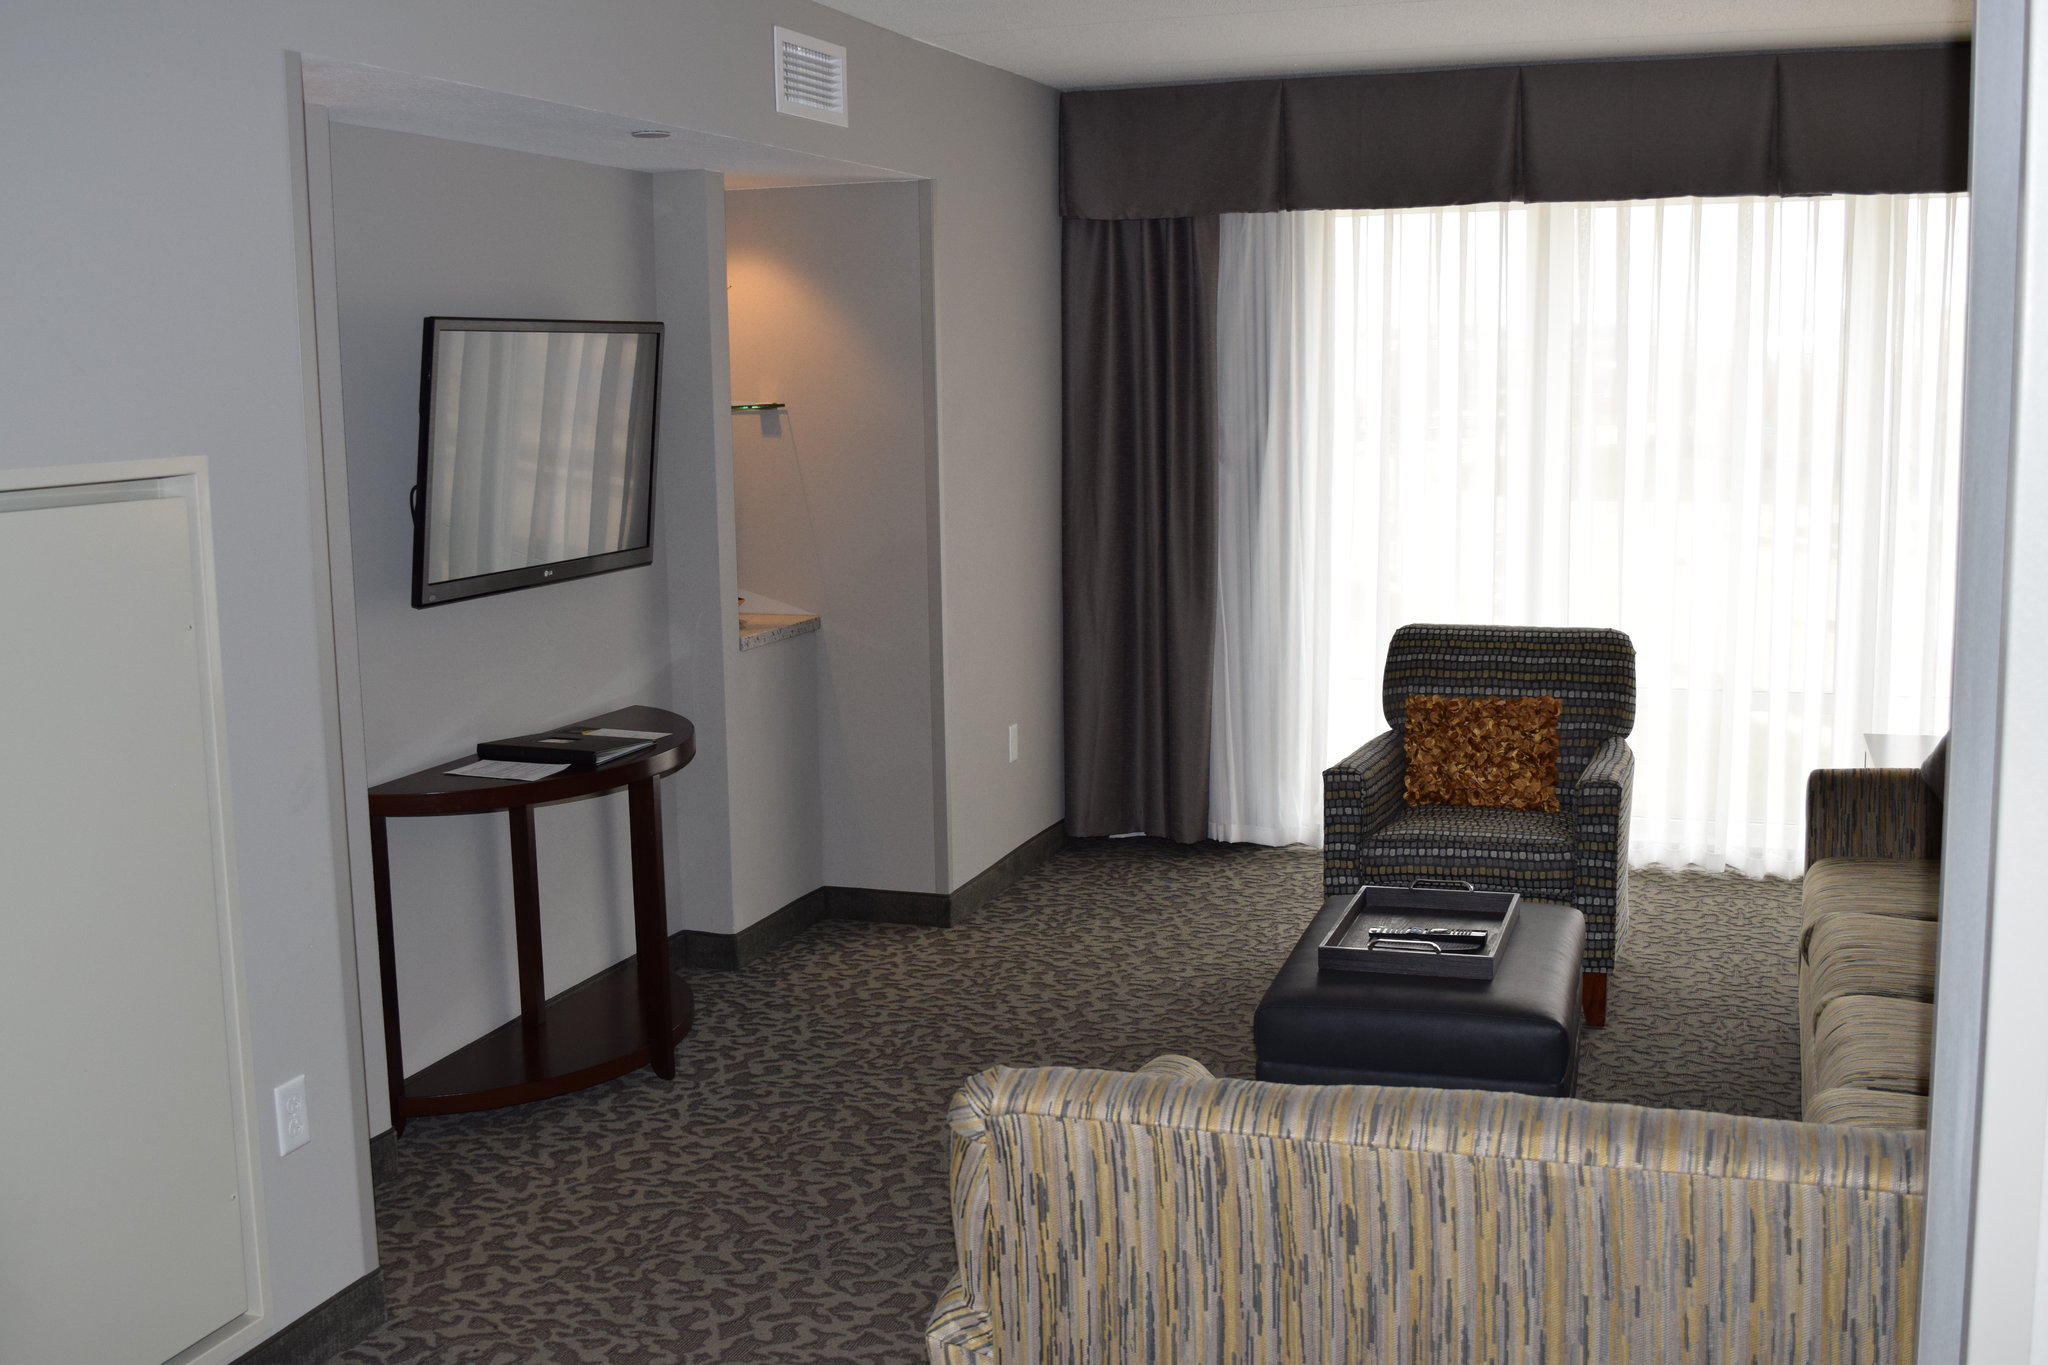 Holiday Inn & Suites East Peoria Photo